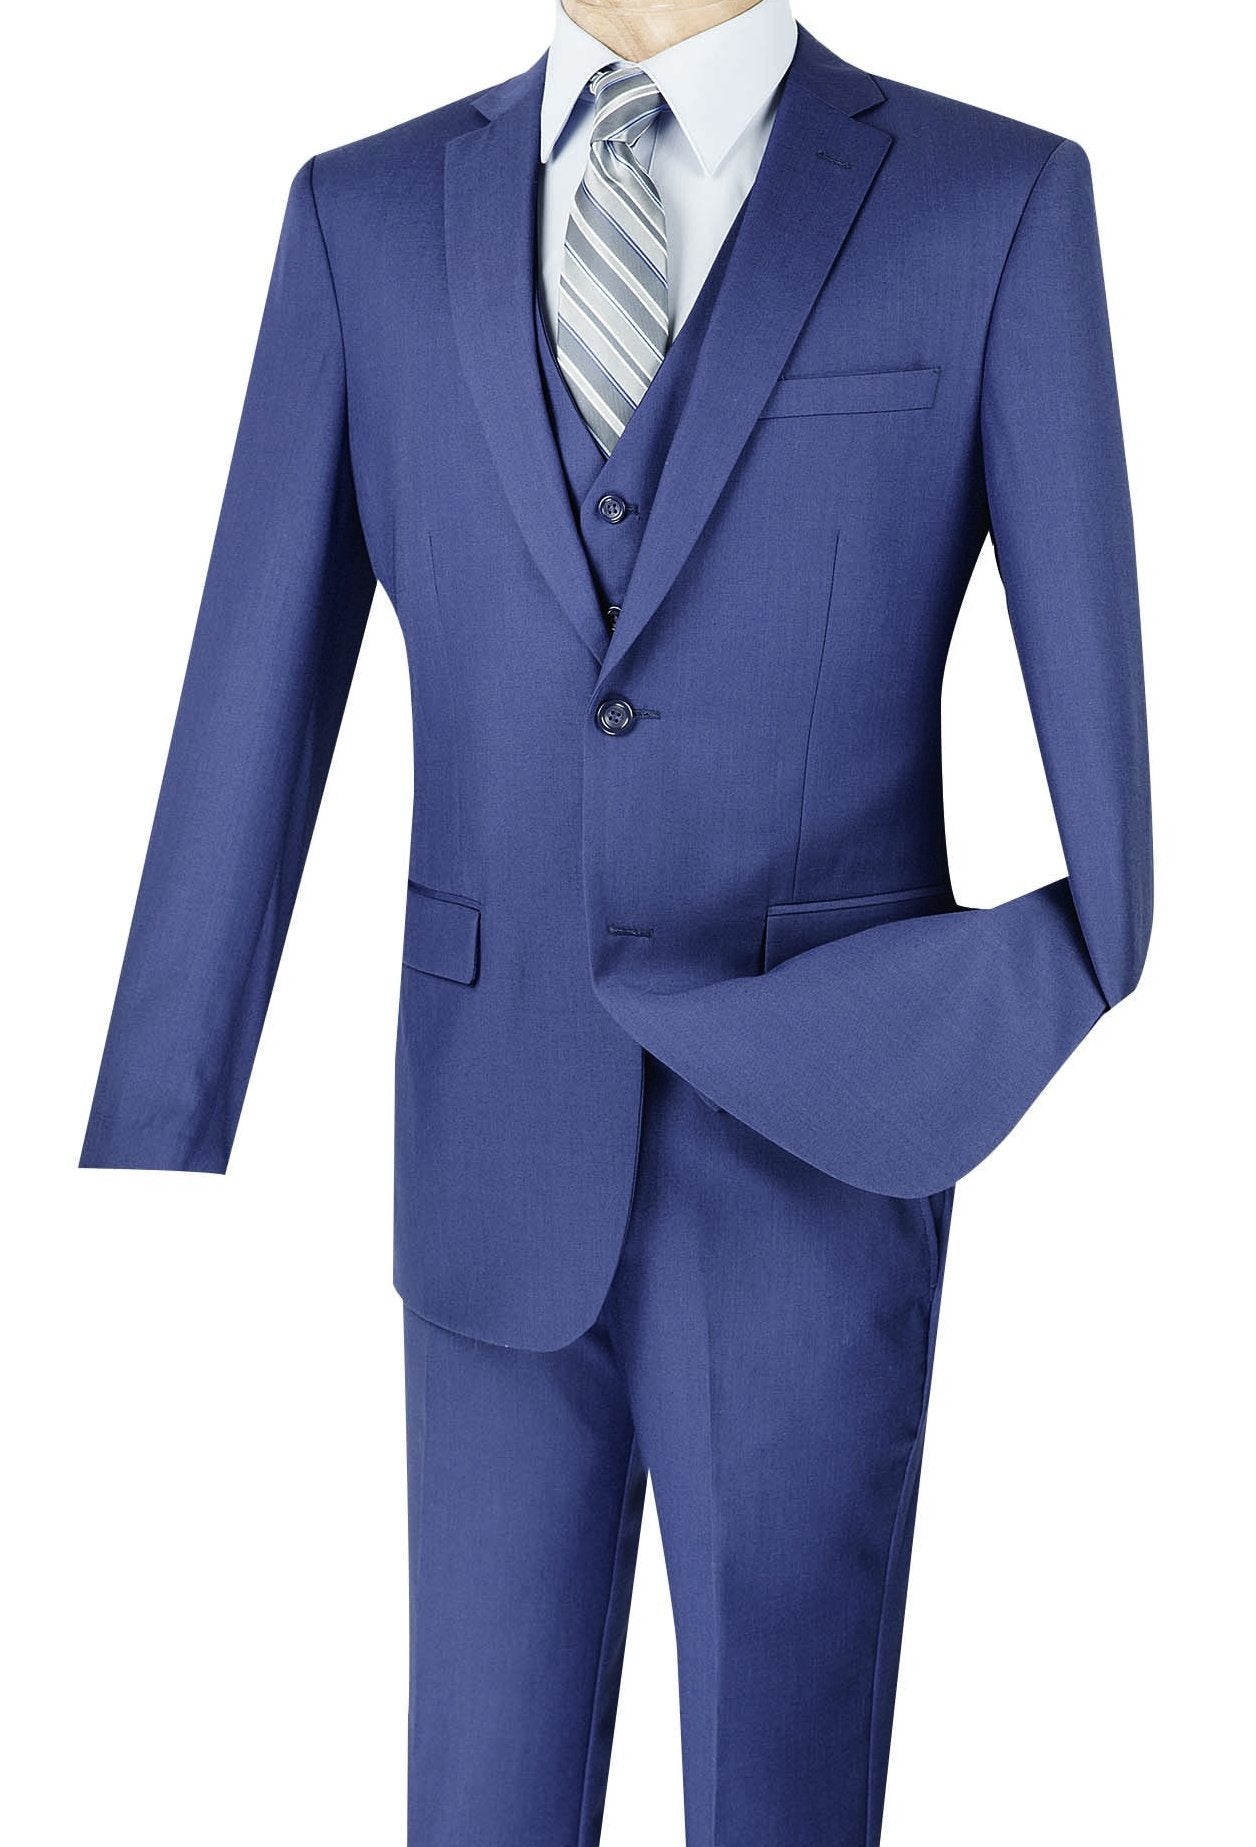 Slim Fit Business Men's Suit 3 Piece 2 Button in Indigo